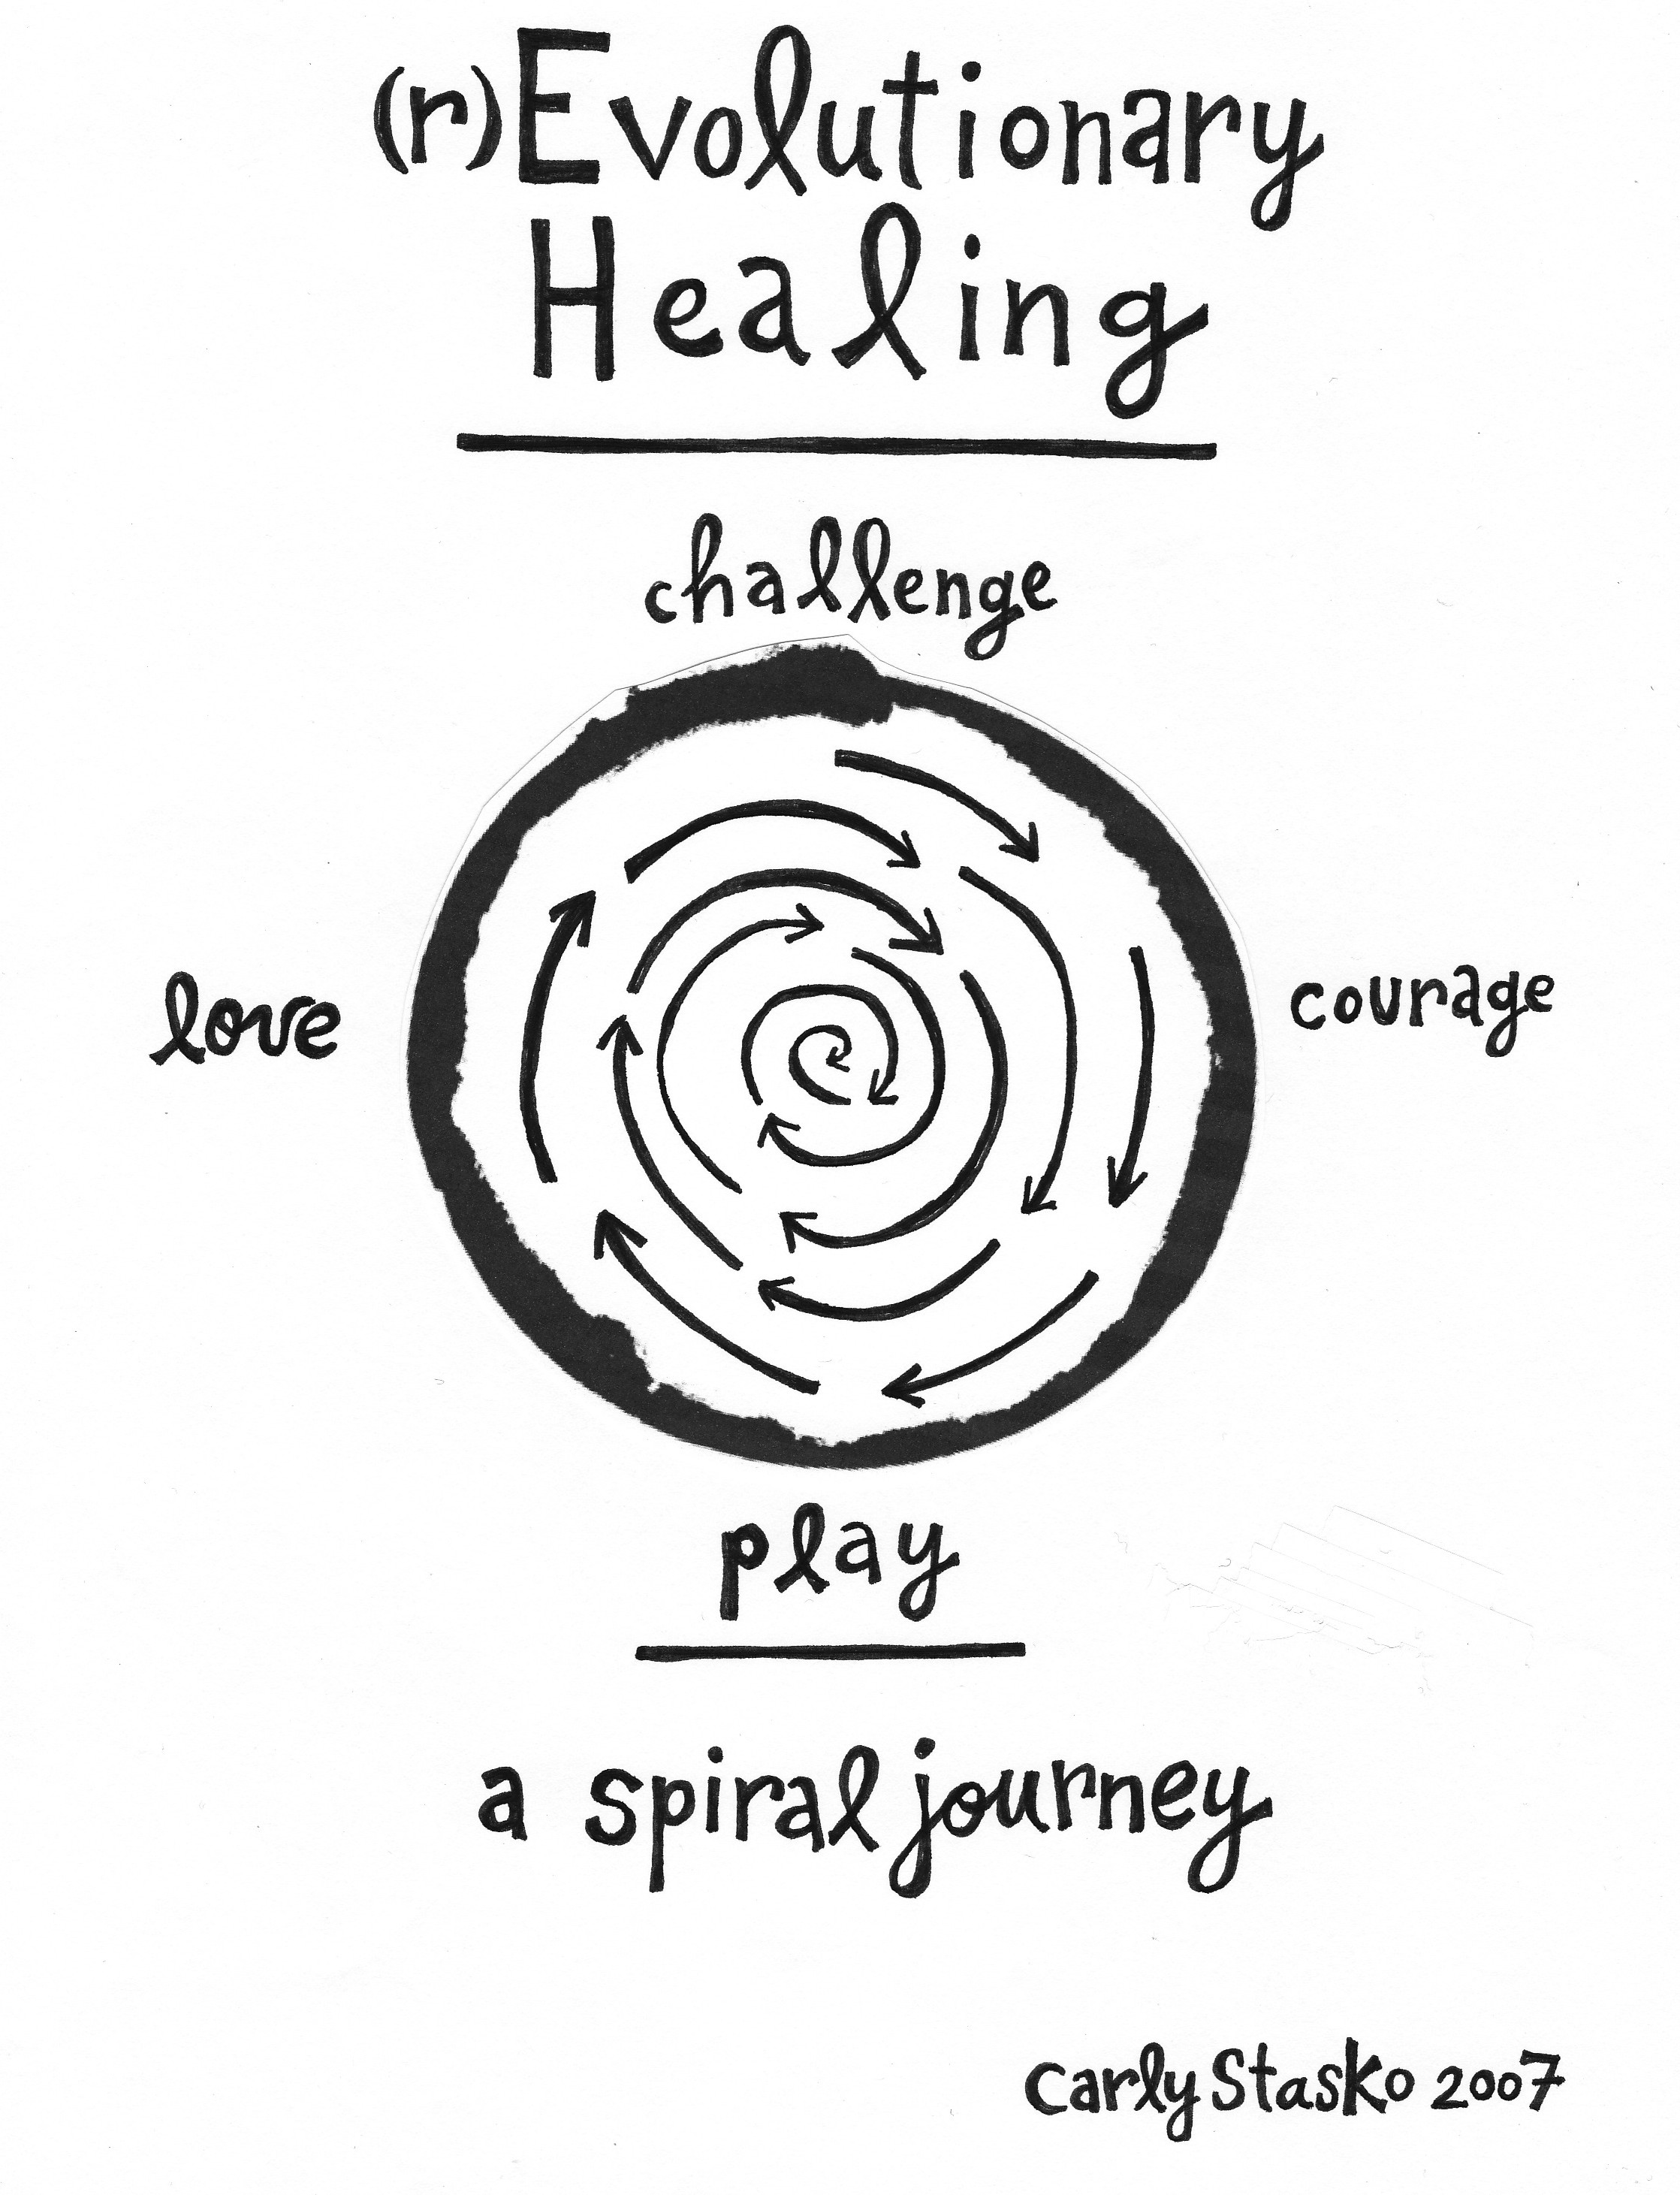 (r)Evolutionary Healing – The Spiral Journey